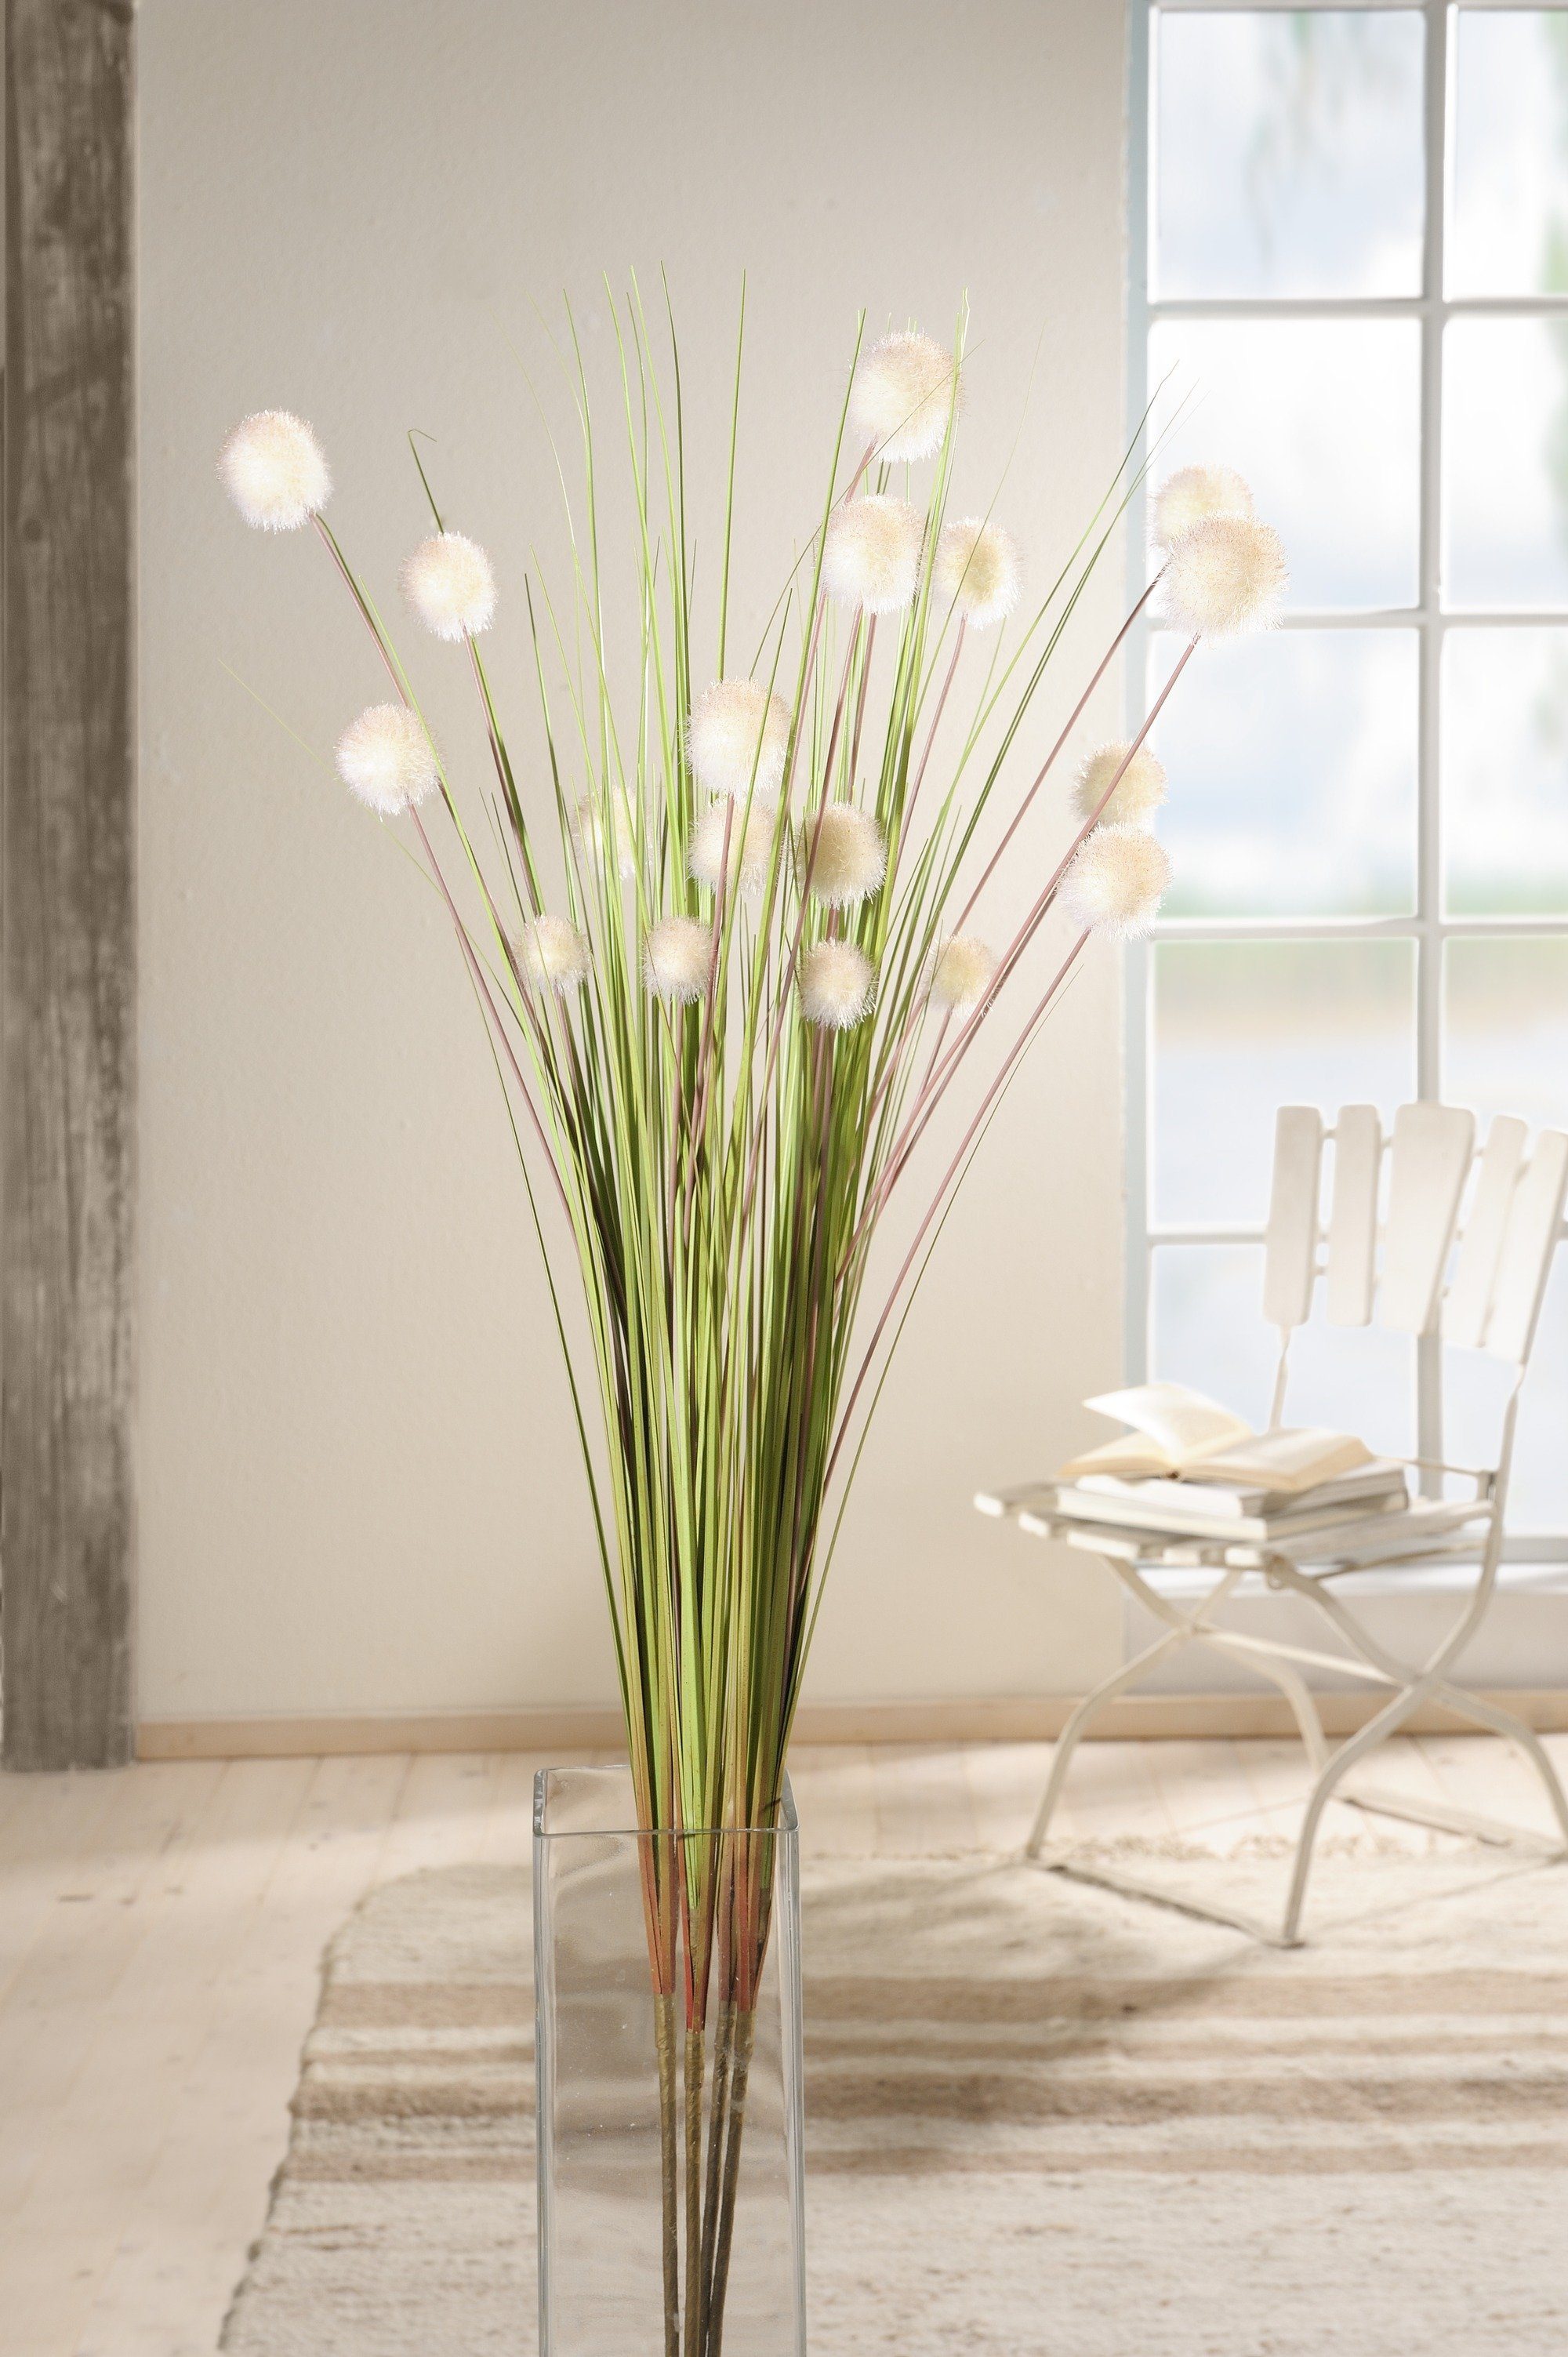 Kunstgras Dekobündel "Blütenkugel" Gras, Dekoleidenschaft, Höhe 105 cm, 4er Set Kunstgräser mit je 5 weißen fluffigen Blütenständen